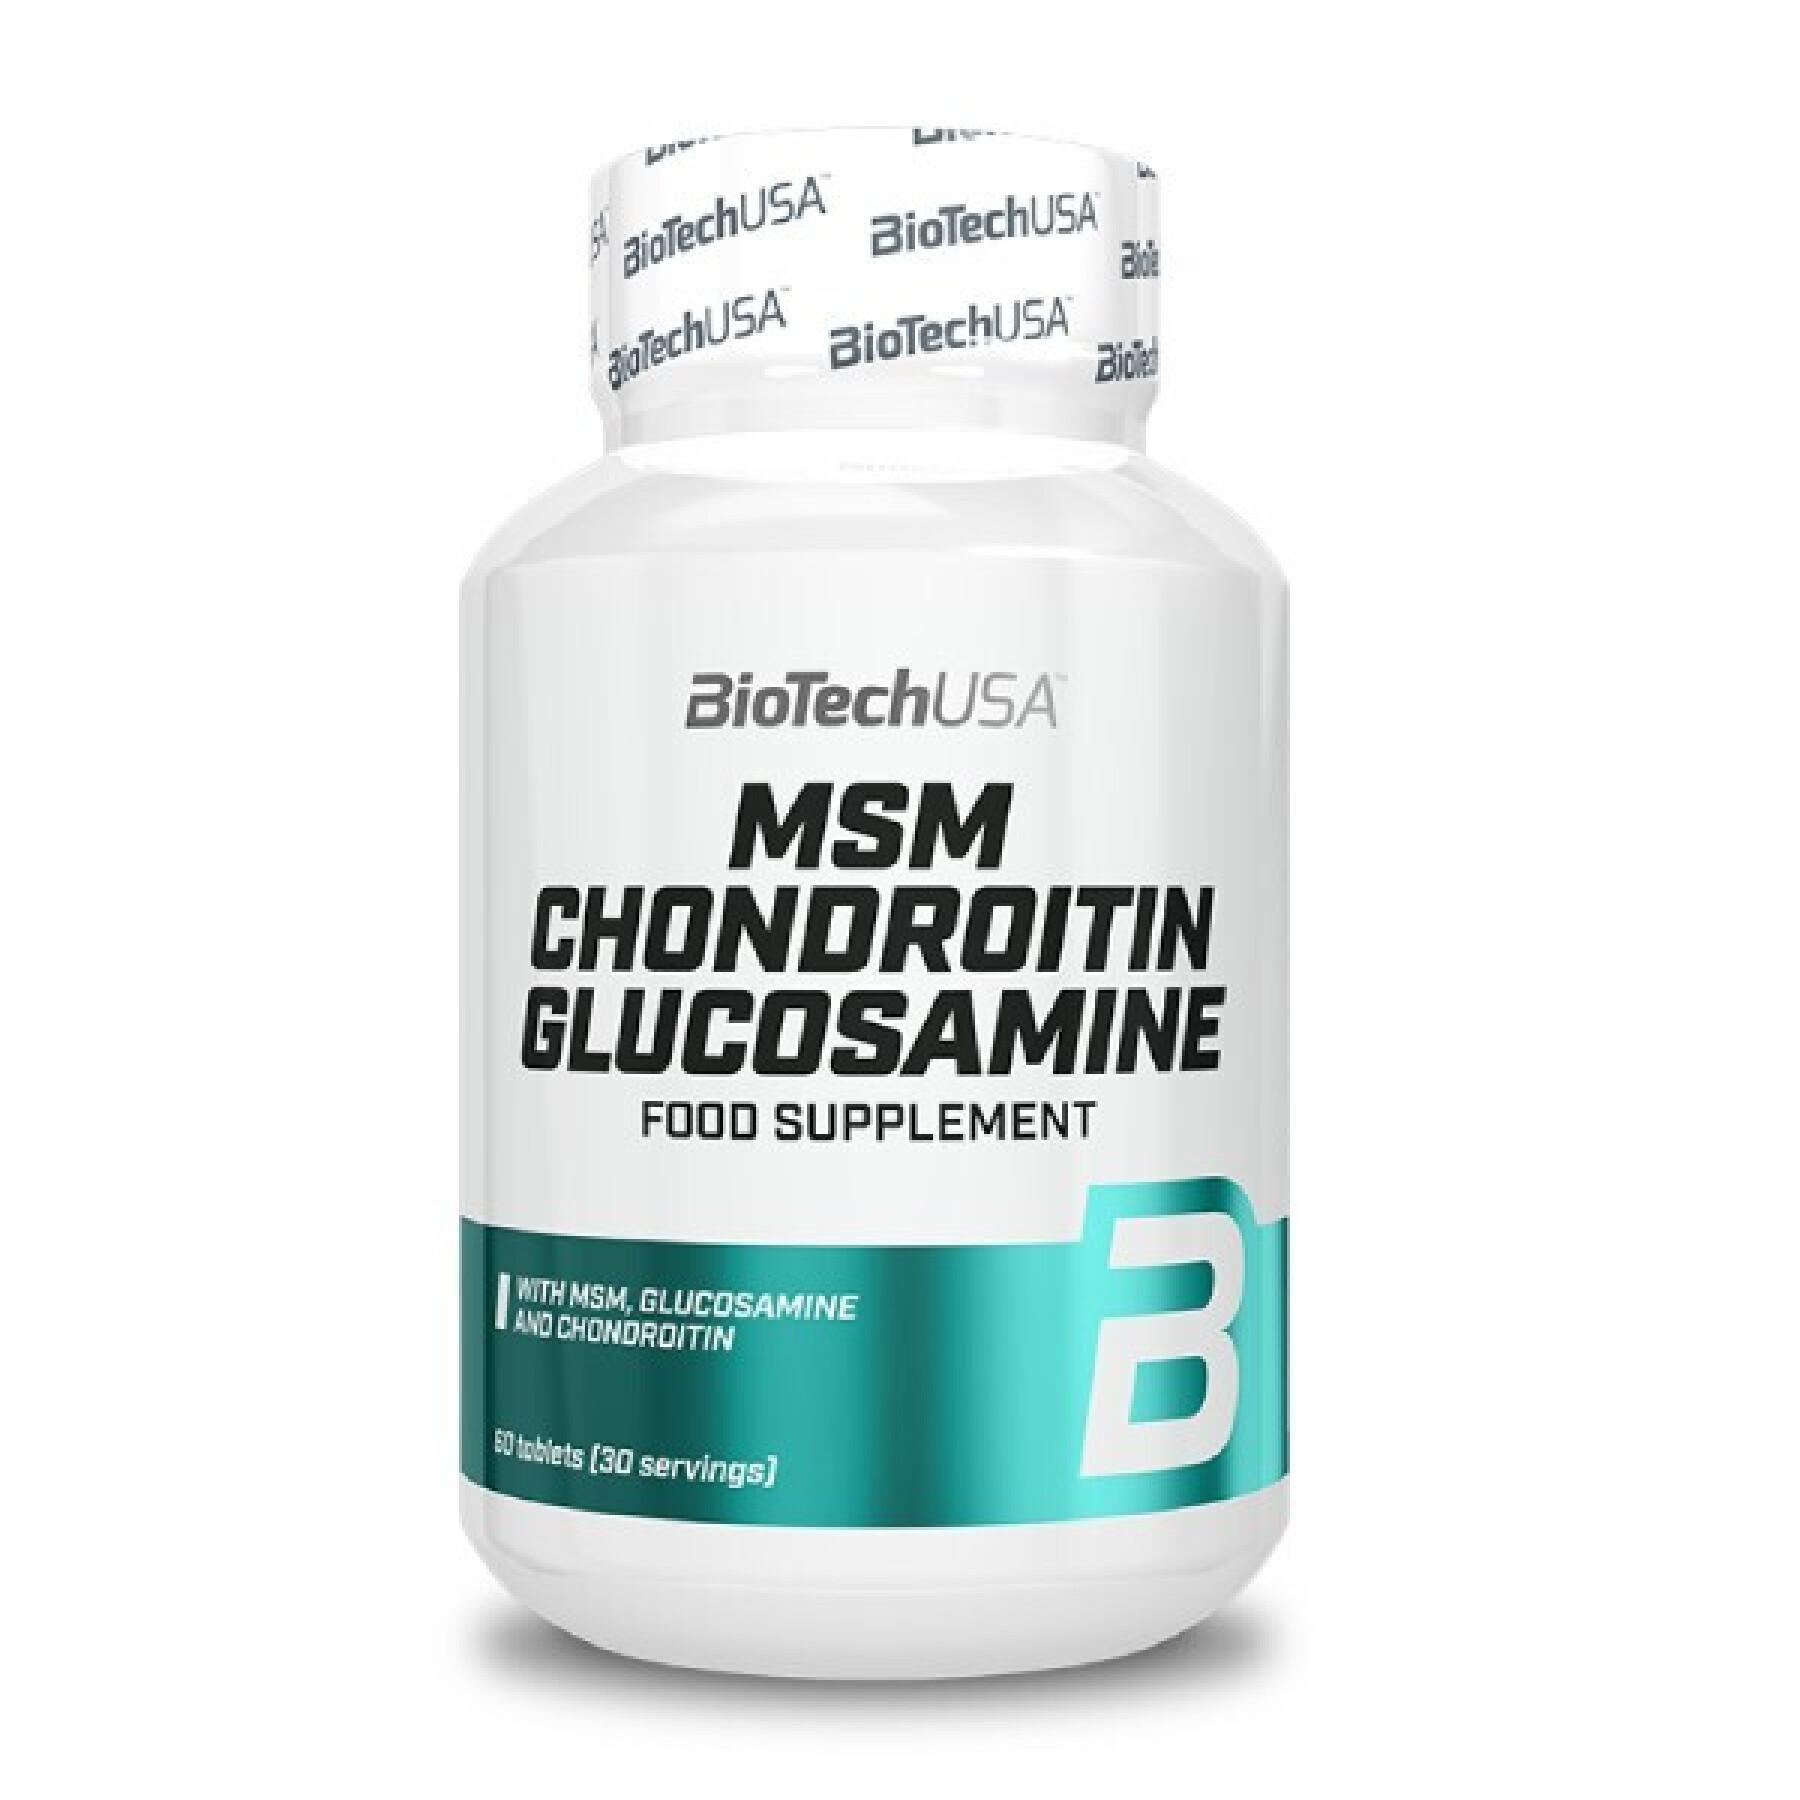 Topf mit Nahrungsergänzungsmitteln 60 Tabletten Biotech USA MSM Chondroitin Glucosamine